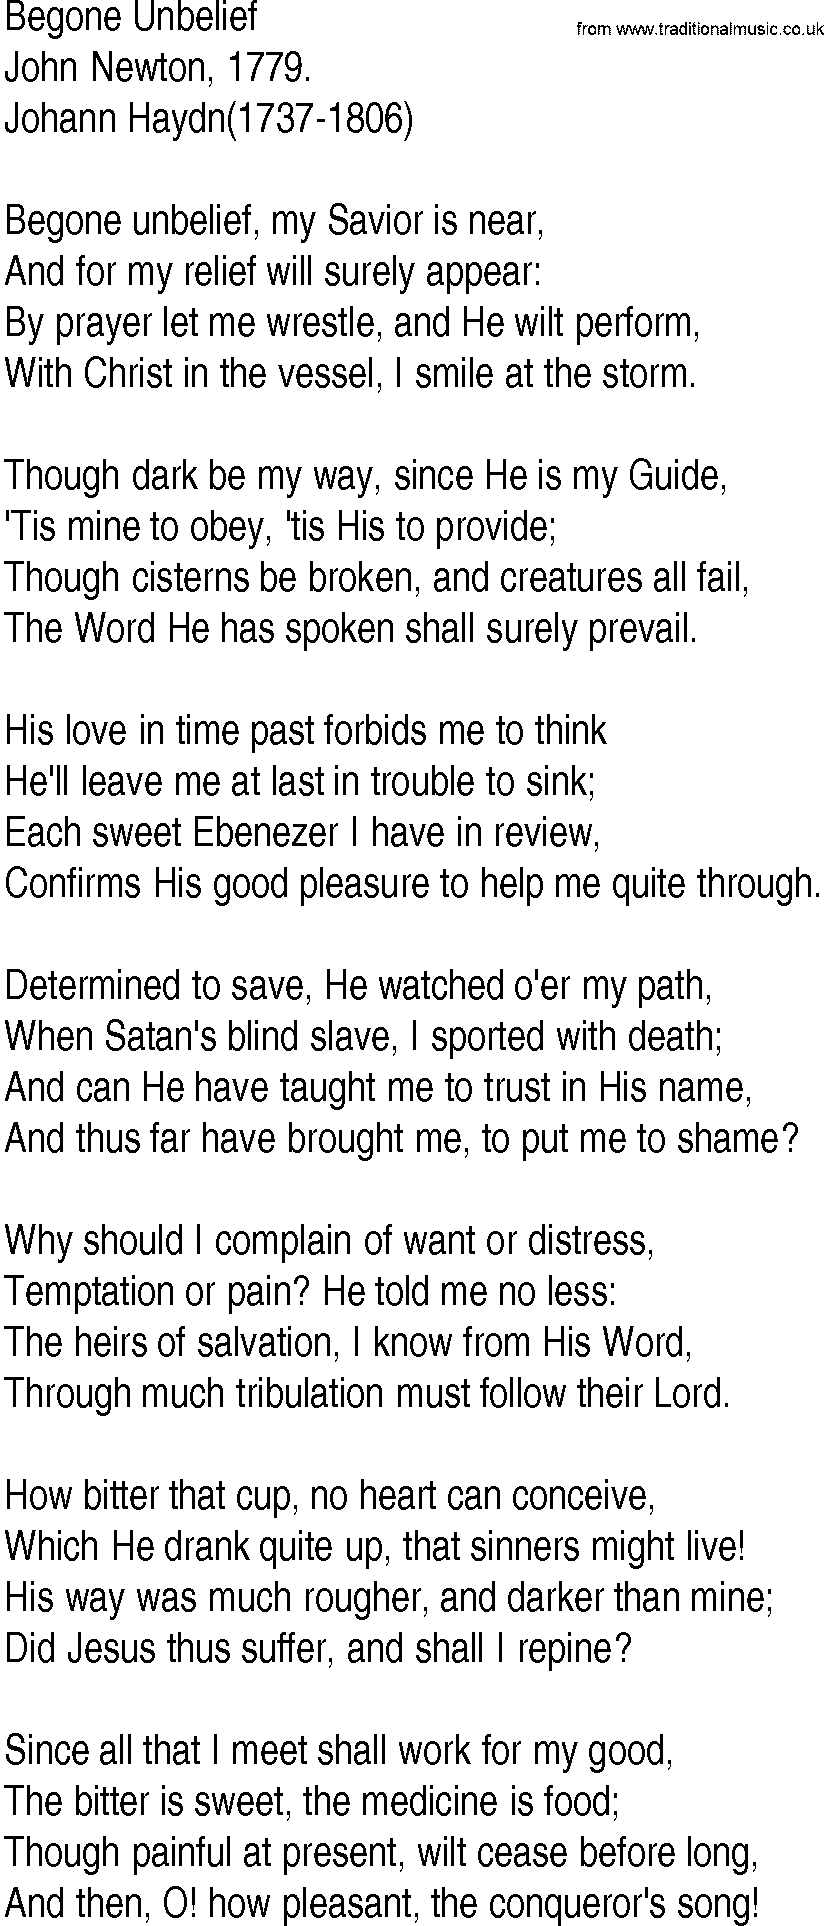 Hymn and Gospel Song: Begone Unbelief by John Newton lyrics